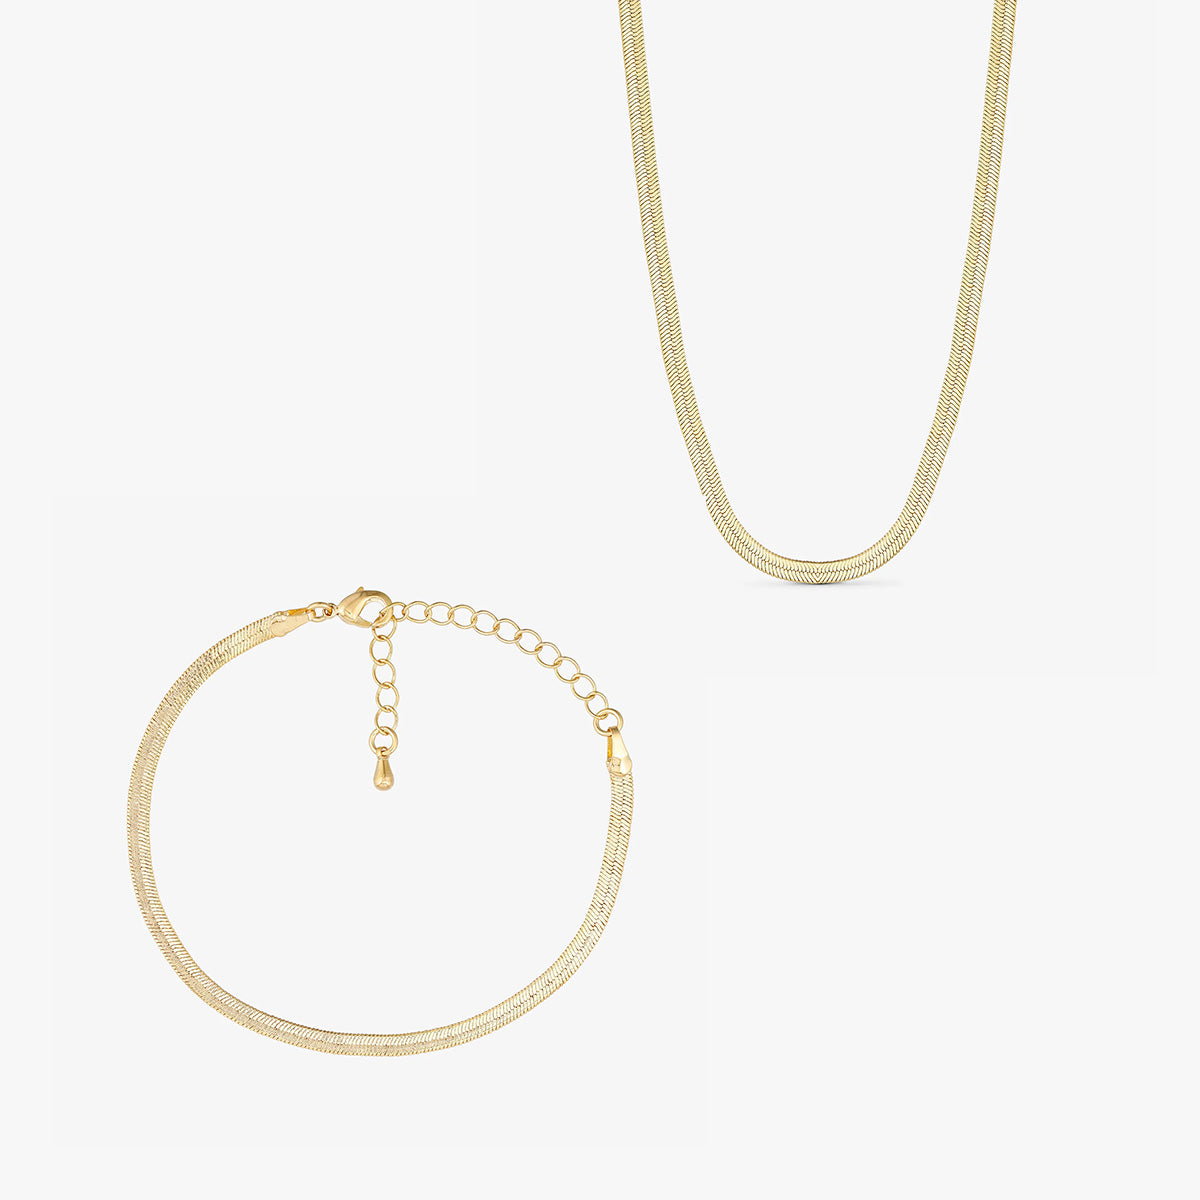 Jewelery set - Laura Necklace / Laura Bracelet - 18 carat gold plated